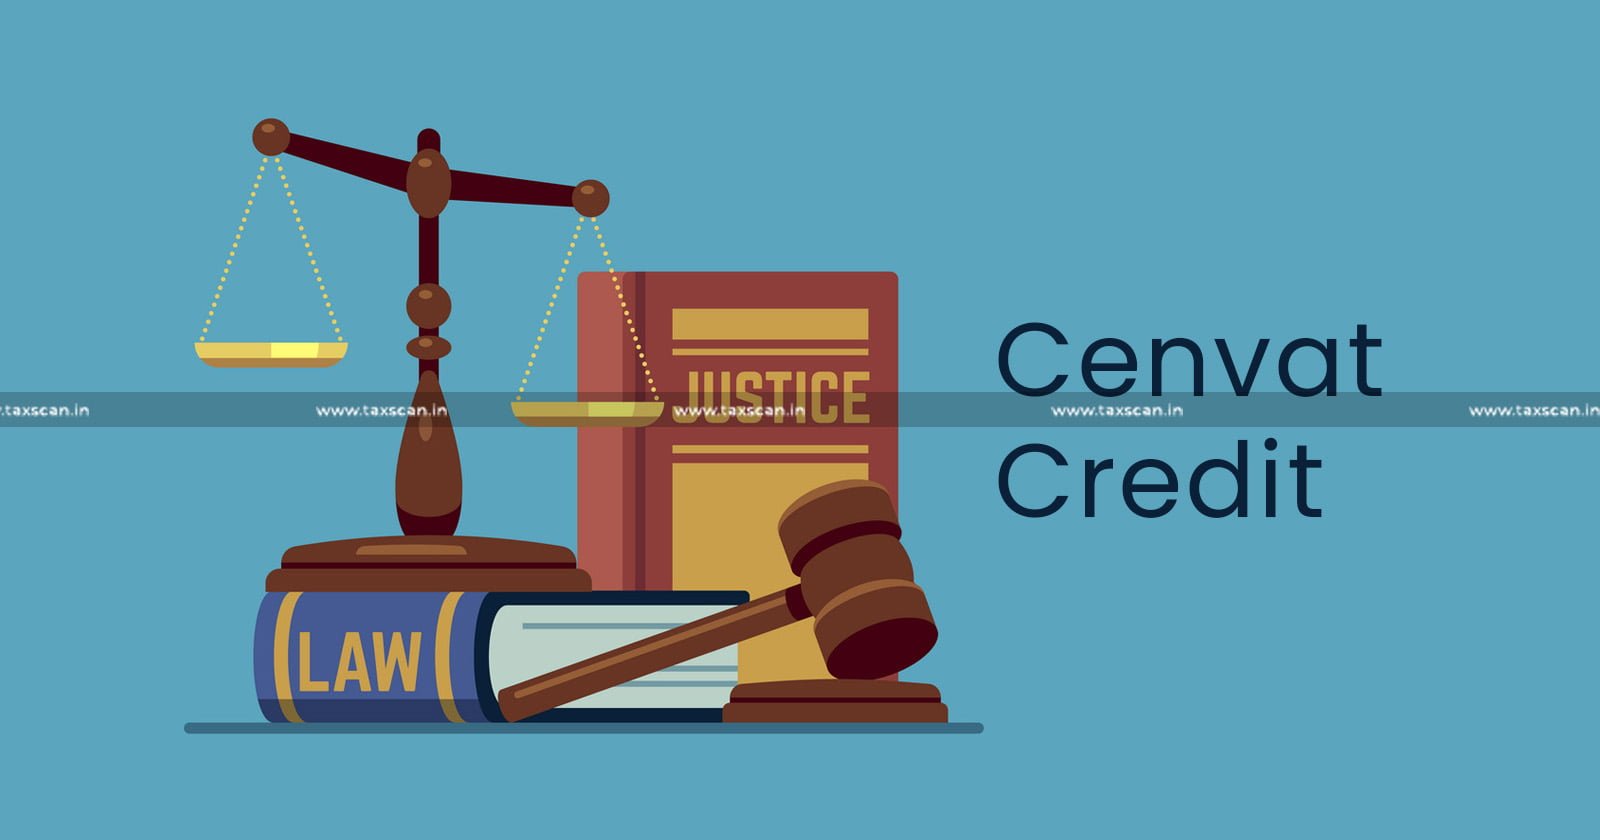 Clandestine - CENVAT Credit - Pre Deposit - Penalty - CESTAT - Excise - Customs - TAXSCAN